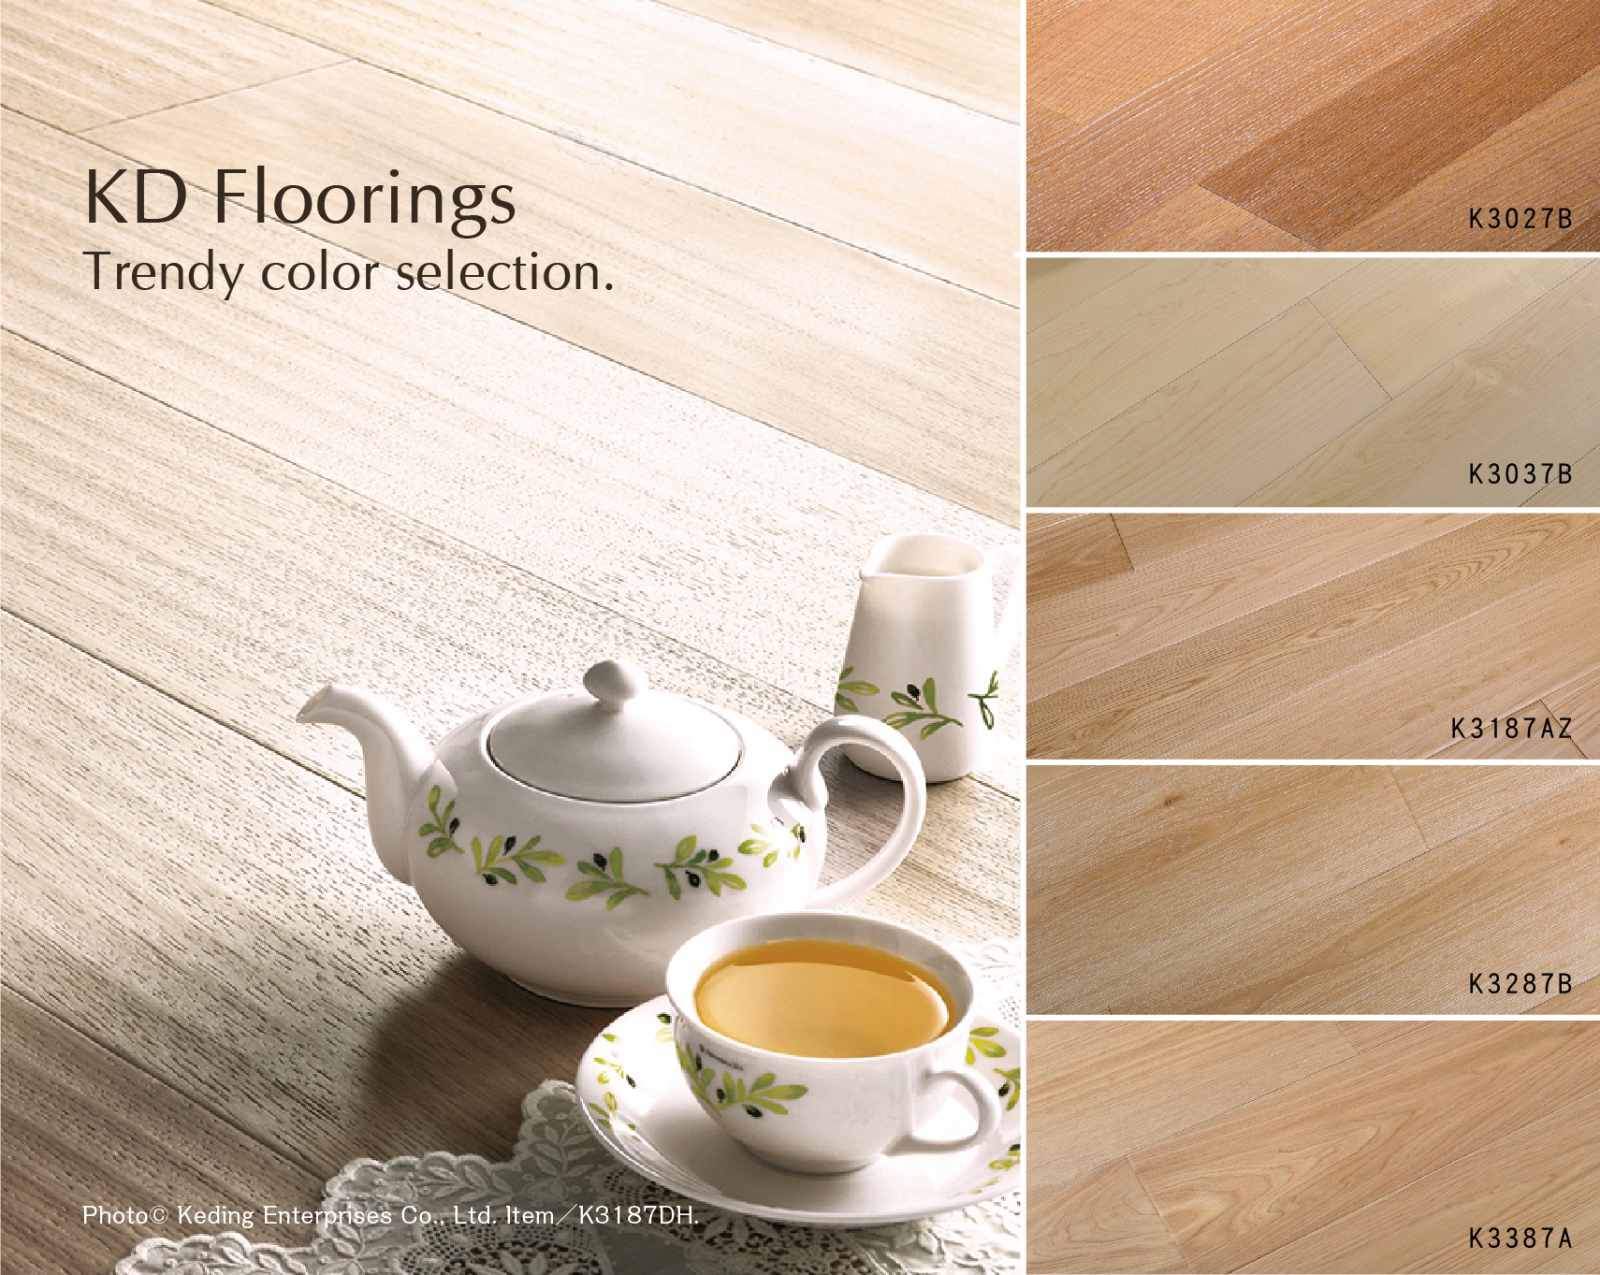 KD Floorings trendy color selection